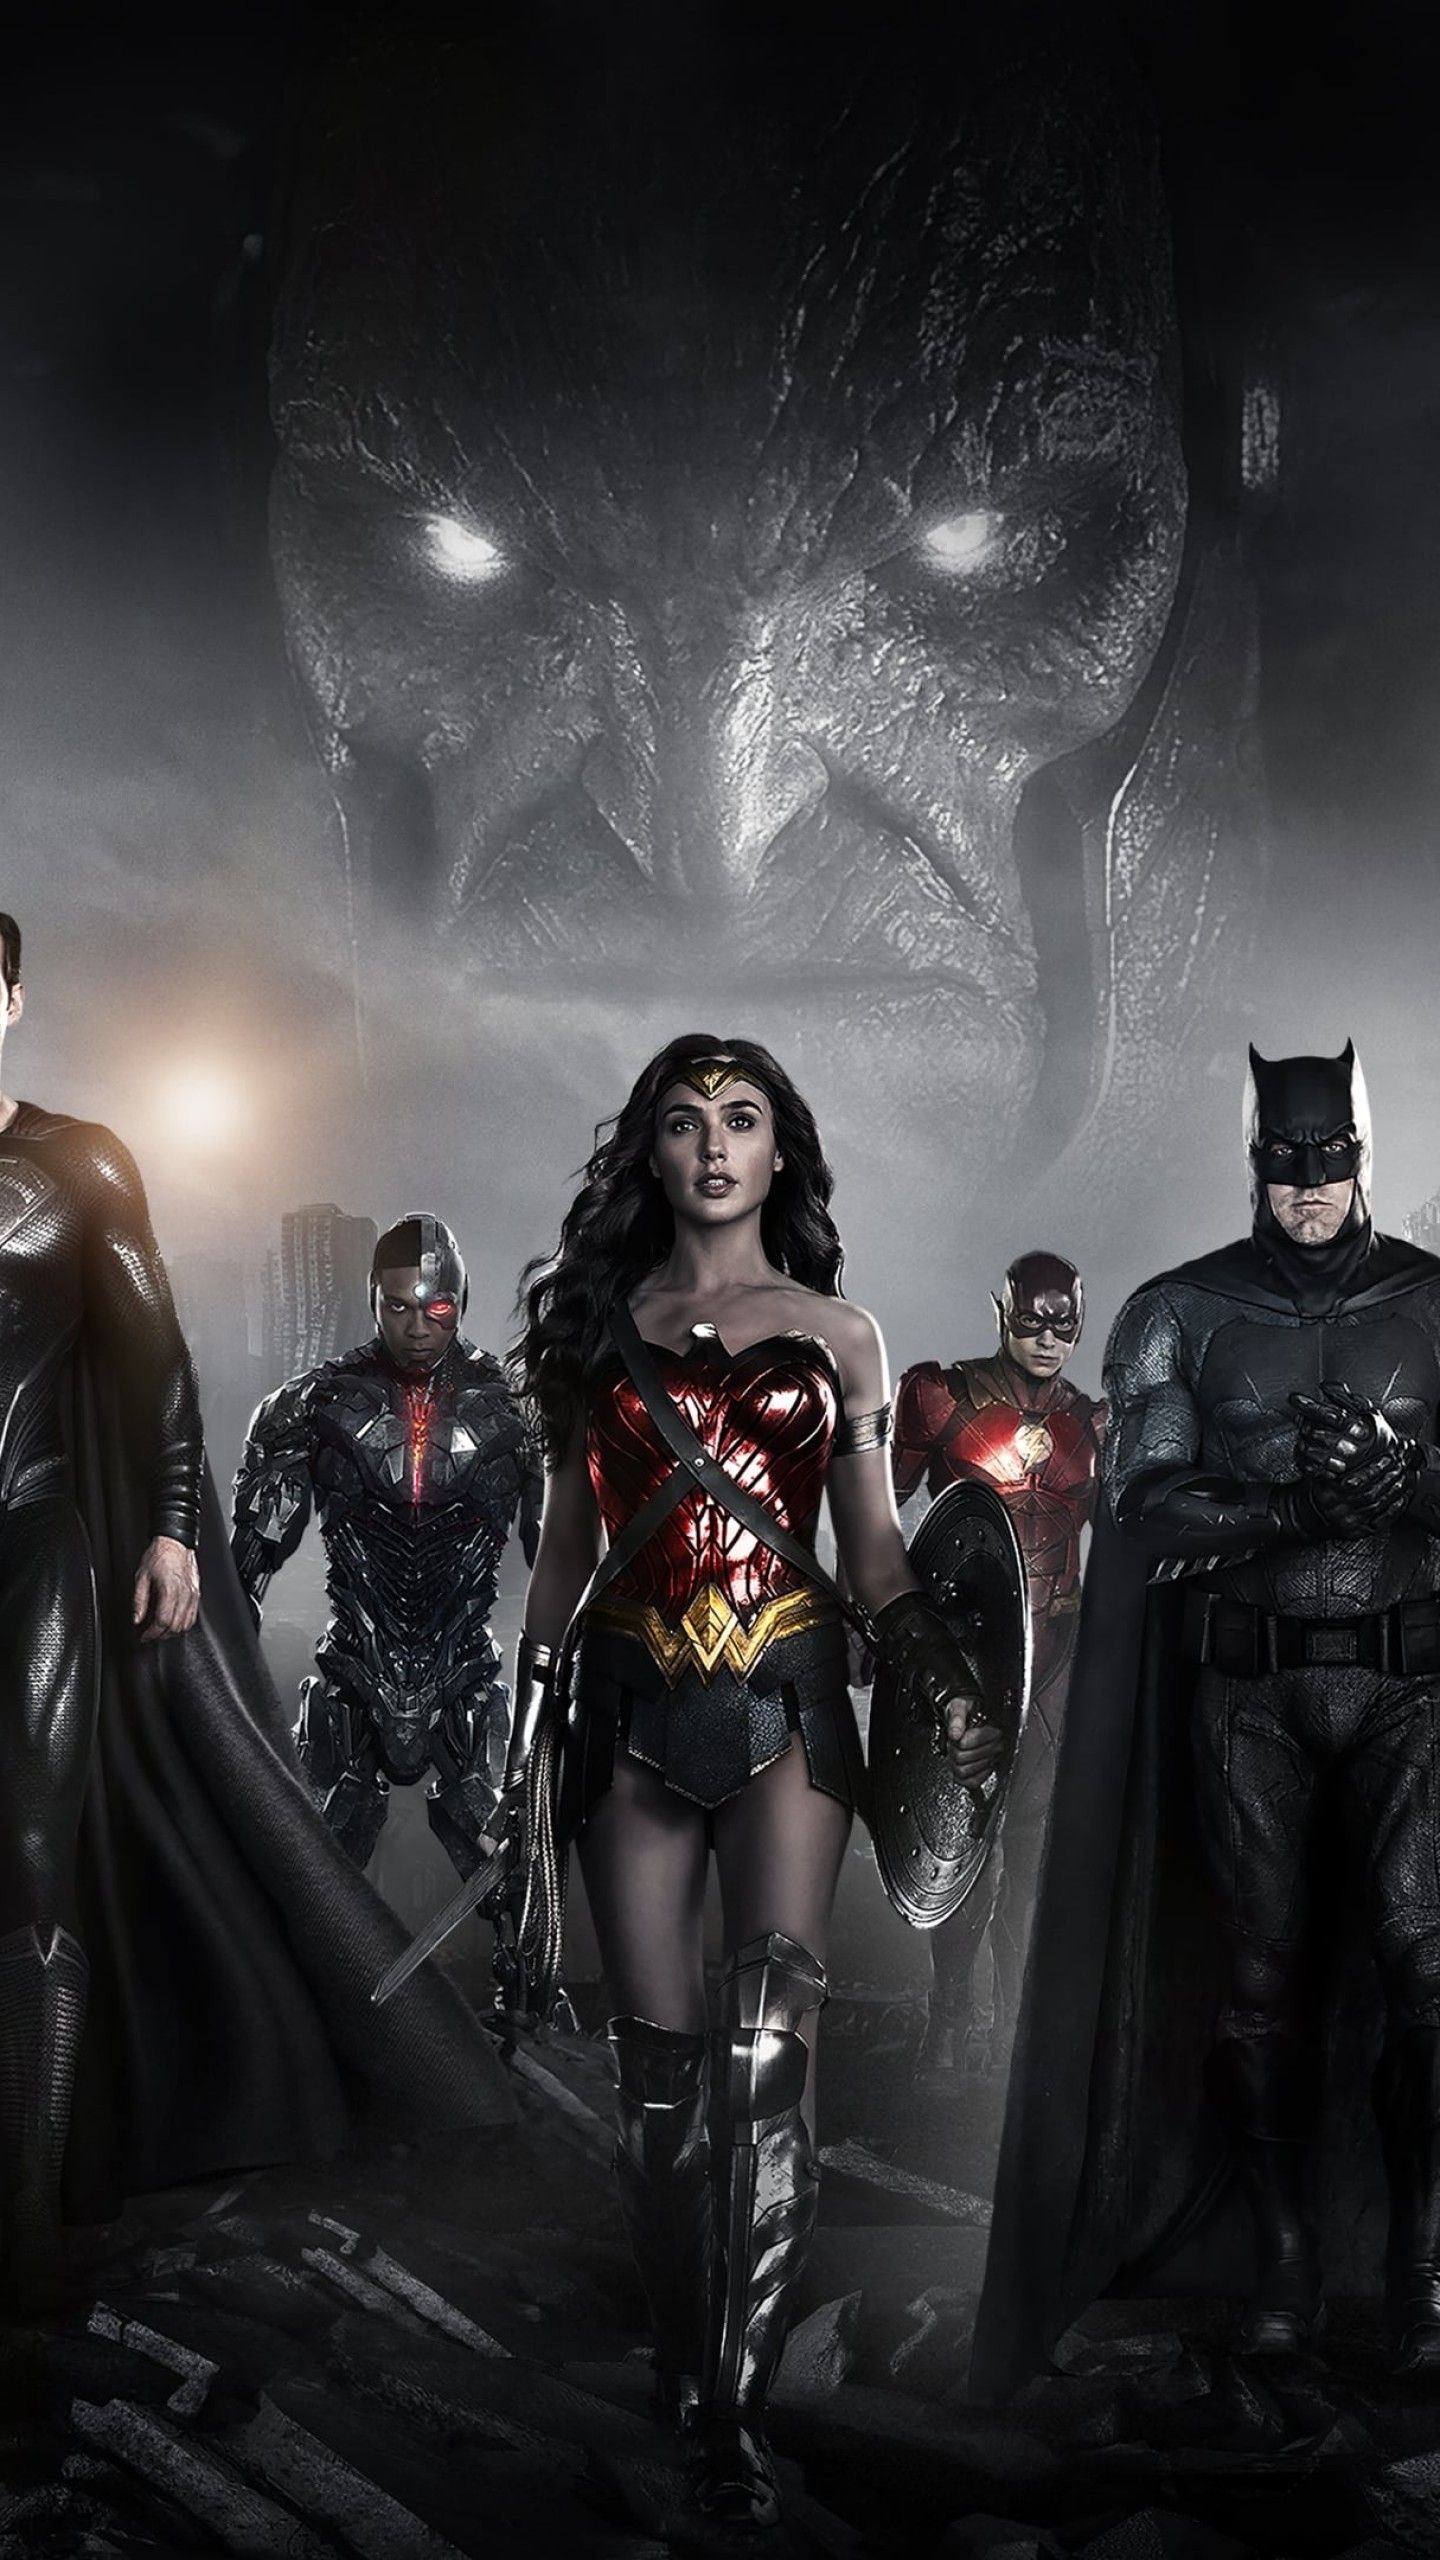 Zack Snyder's Justice League 4K Wallpaper, 2021 Movies, Superman, Batman, Wonder Woman, Aquaman, The Flash, Cyborg, Black Dark